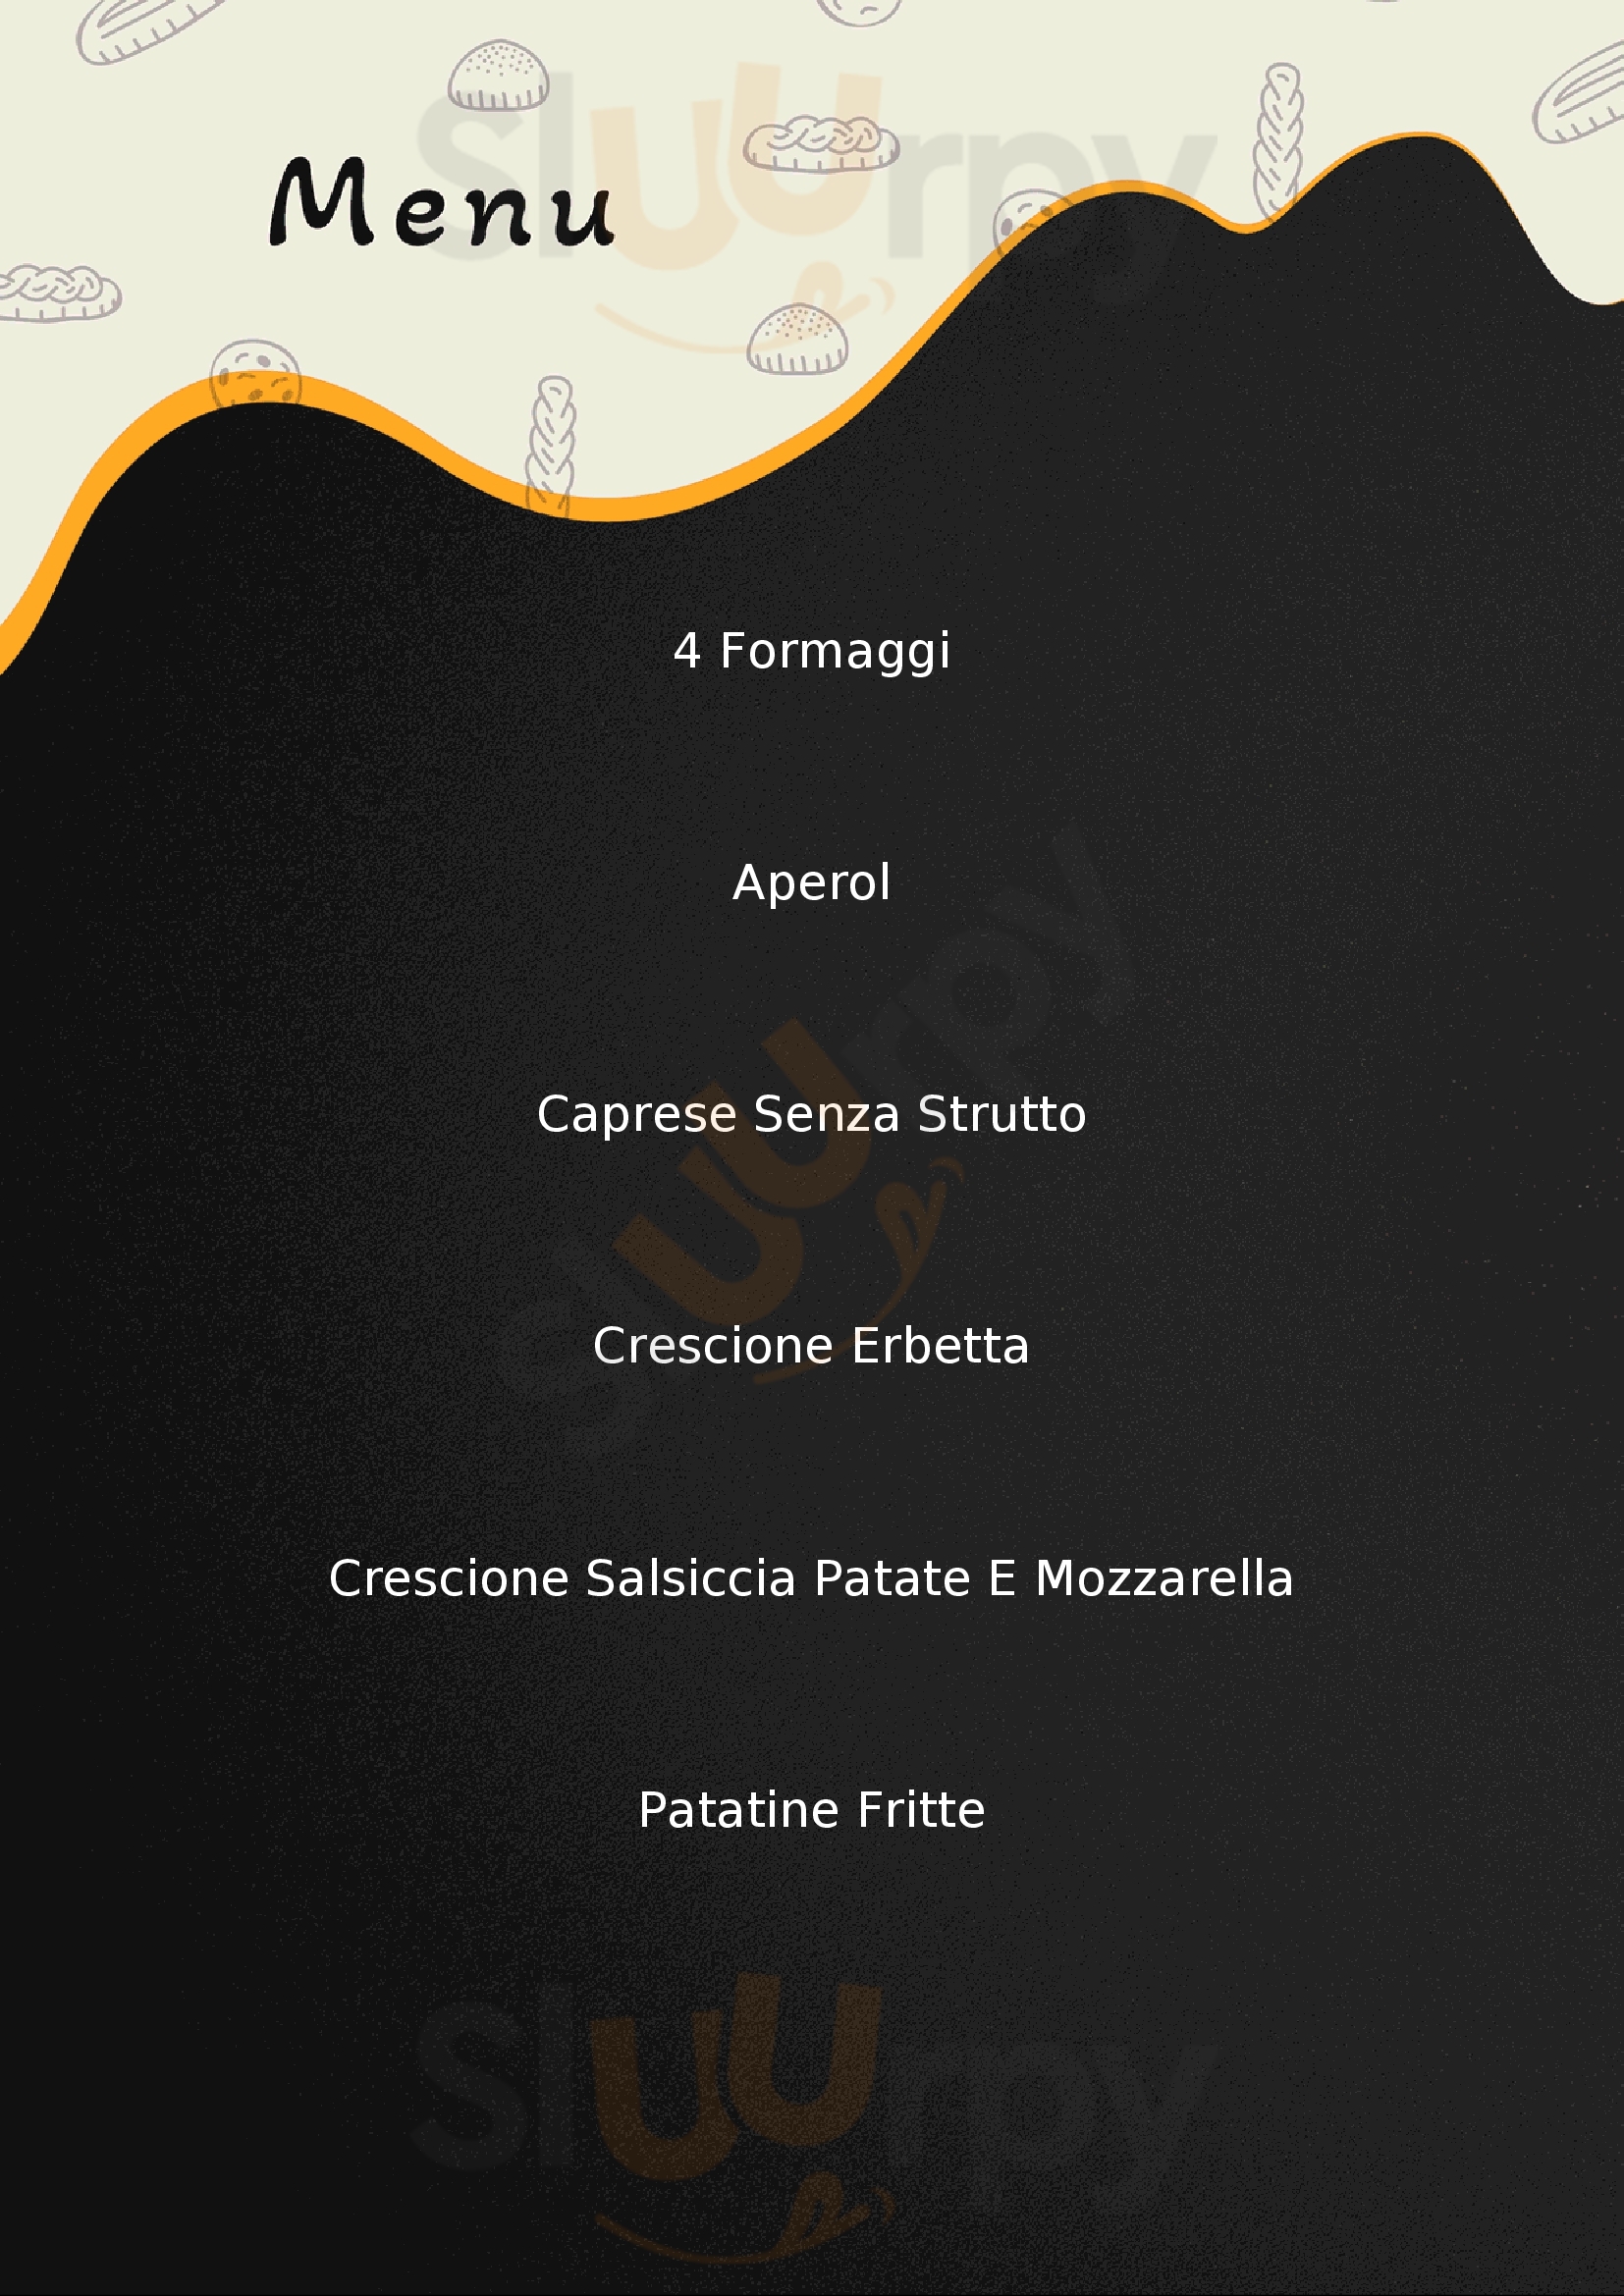 L'Ingrediente Segreto - Piadineria dal 1972 Ravenna menù 1 pagina